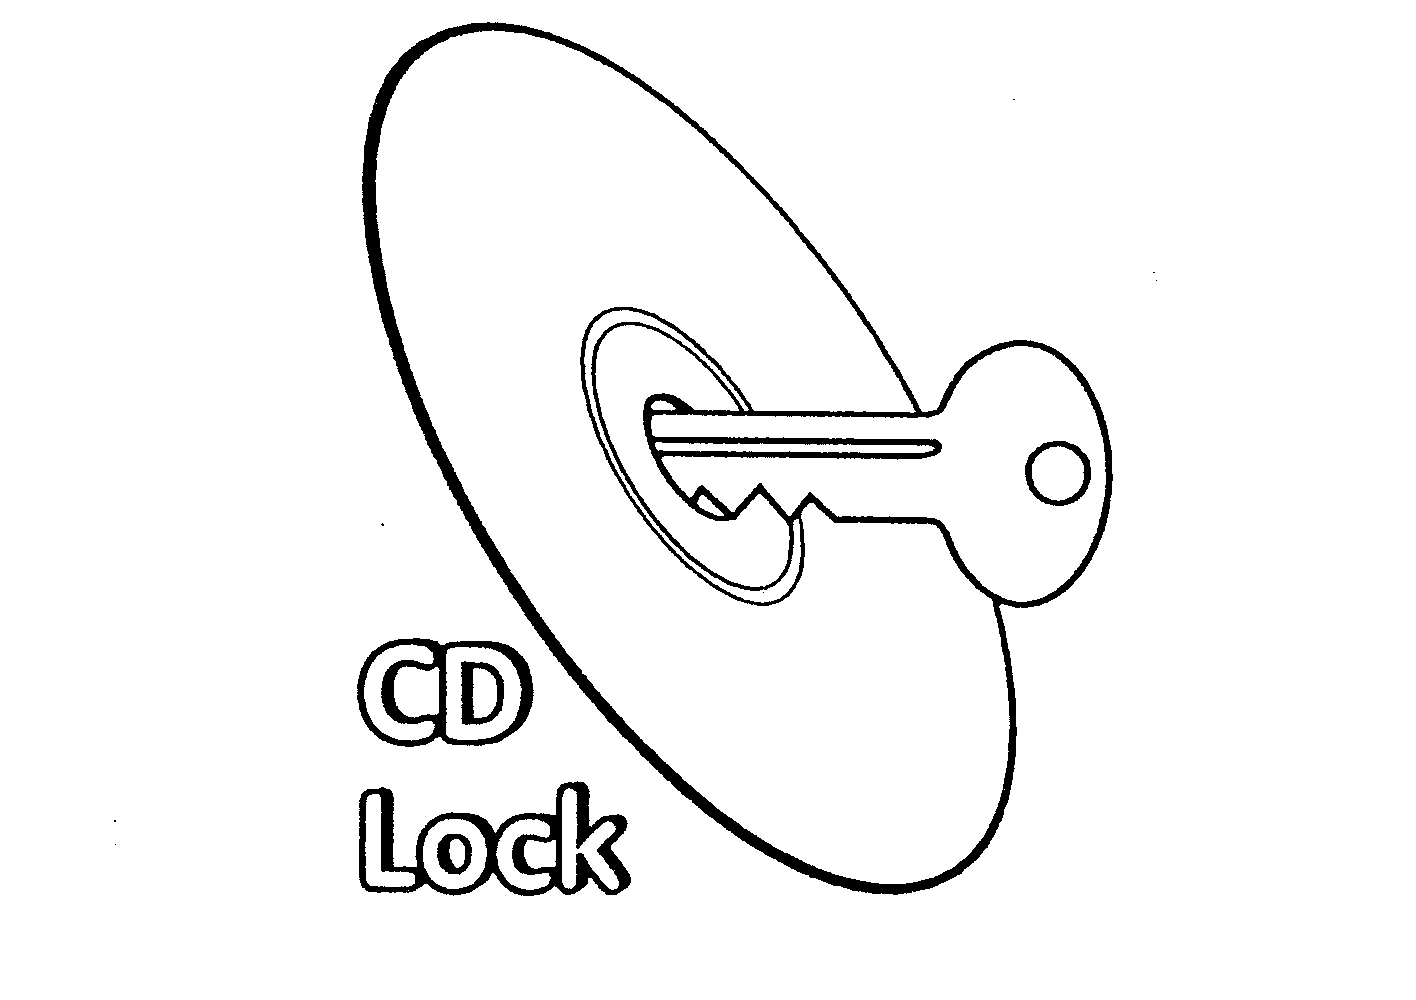  CD LOCK